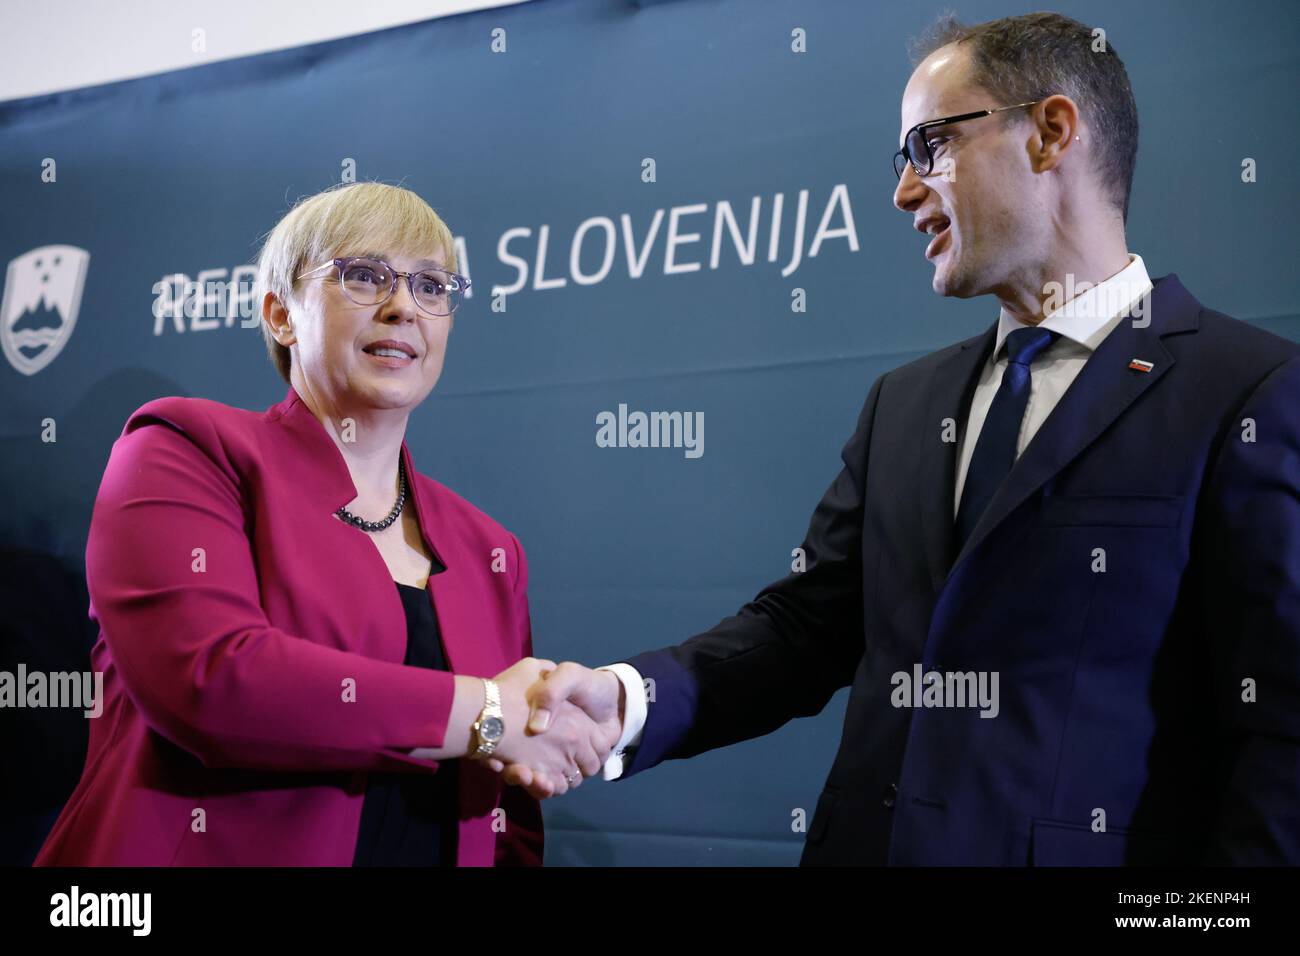 Slovenia: Natasa Pirc Musar elected first female president – DW